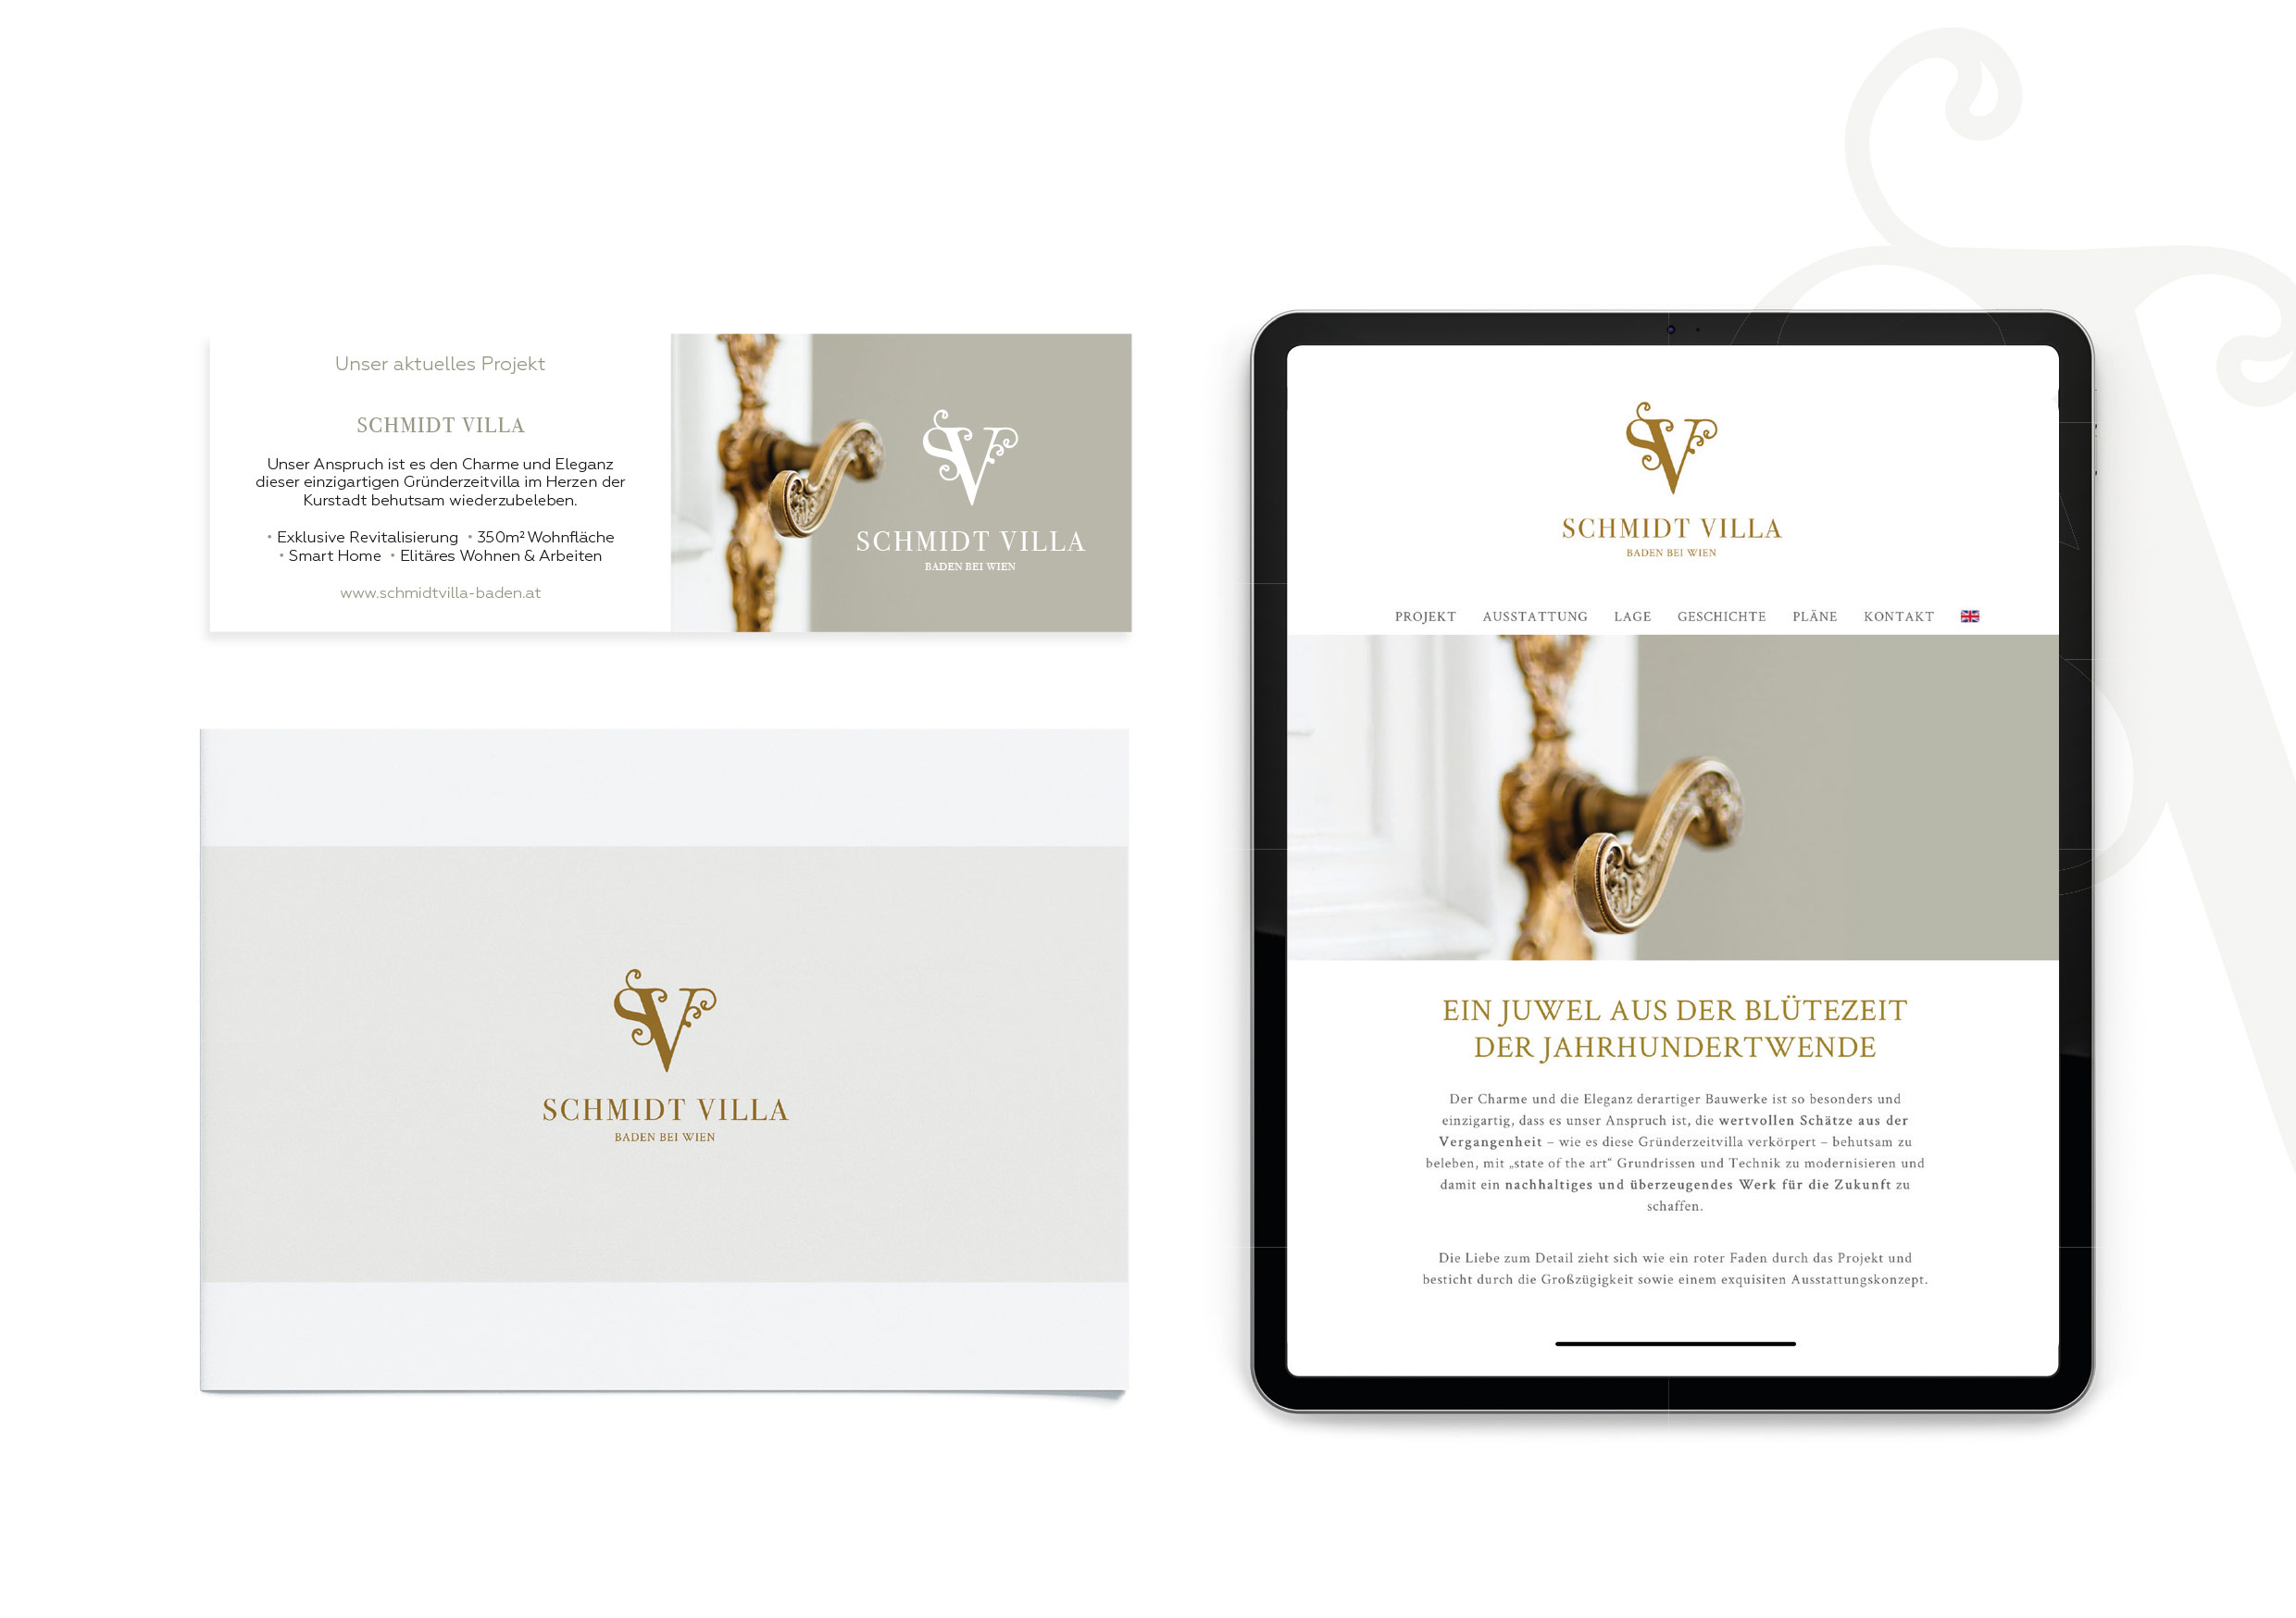 Schmidt Villa business cards, folder and website